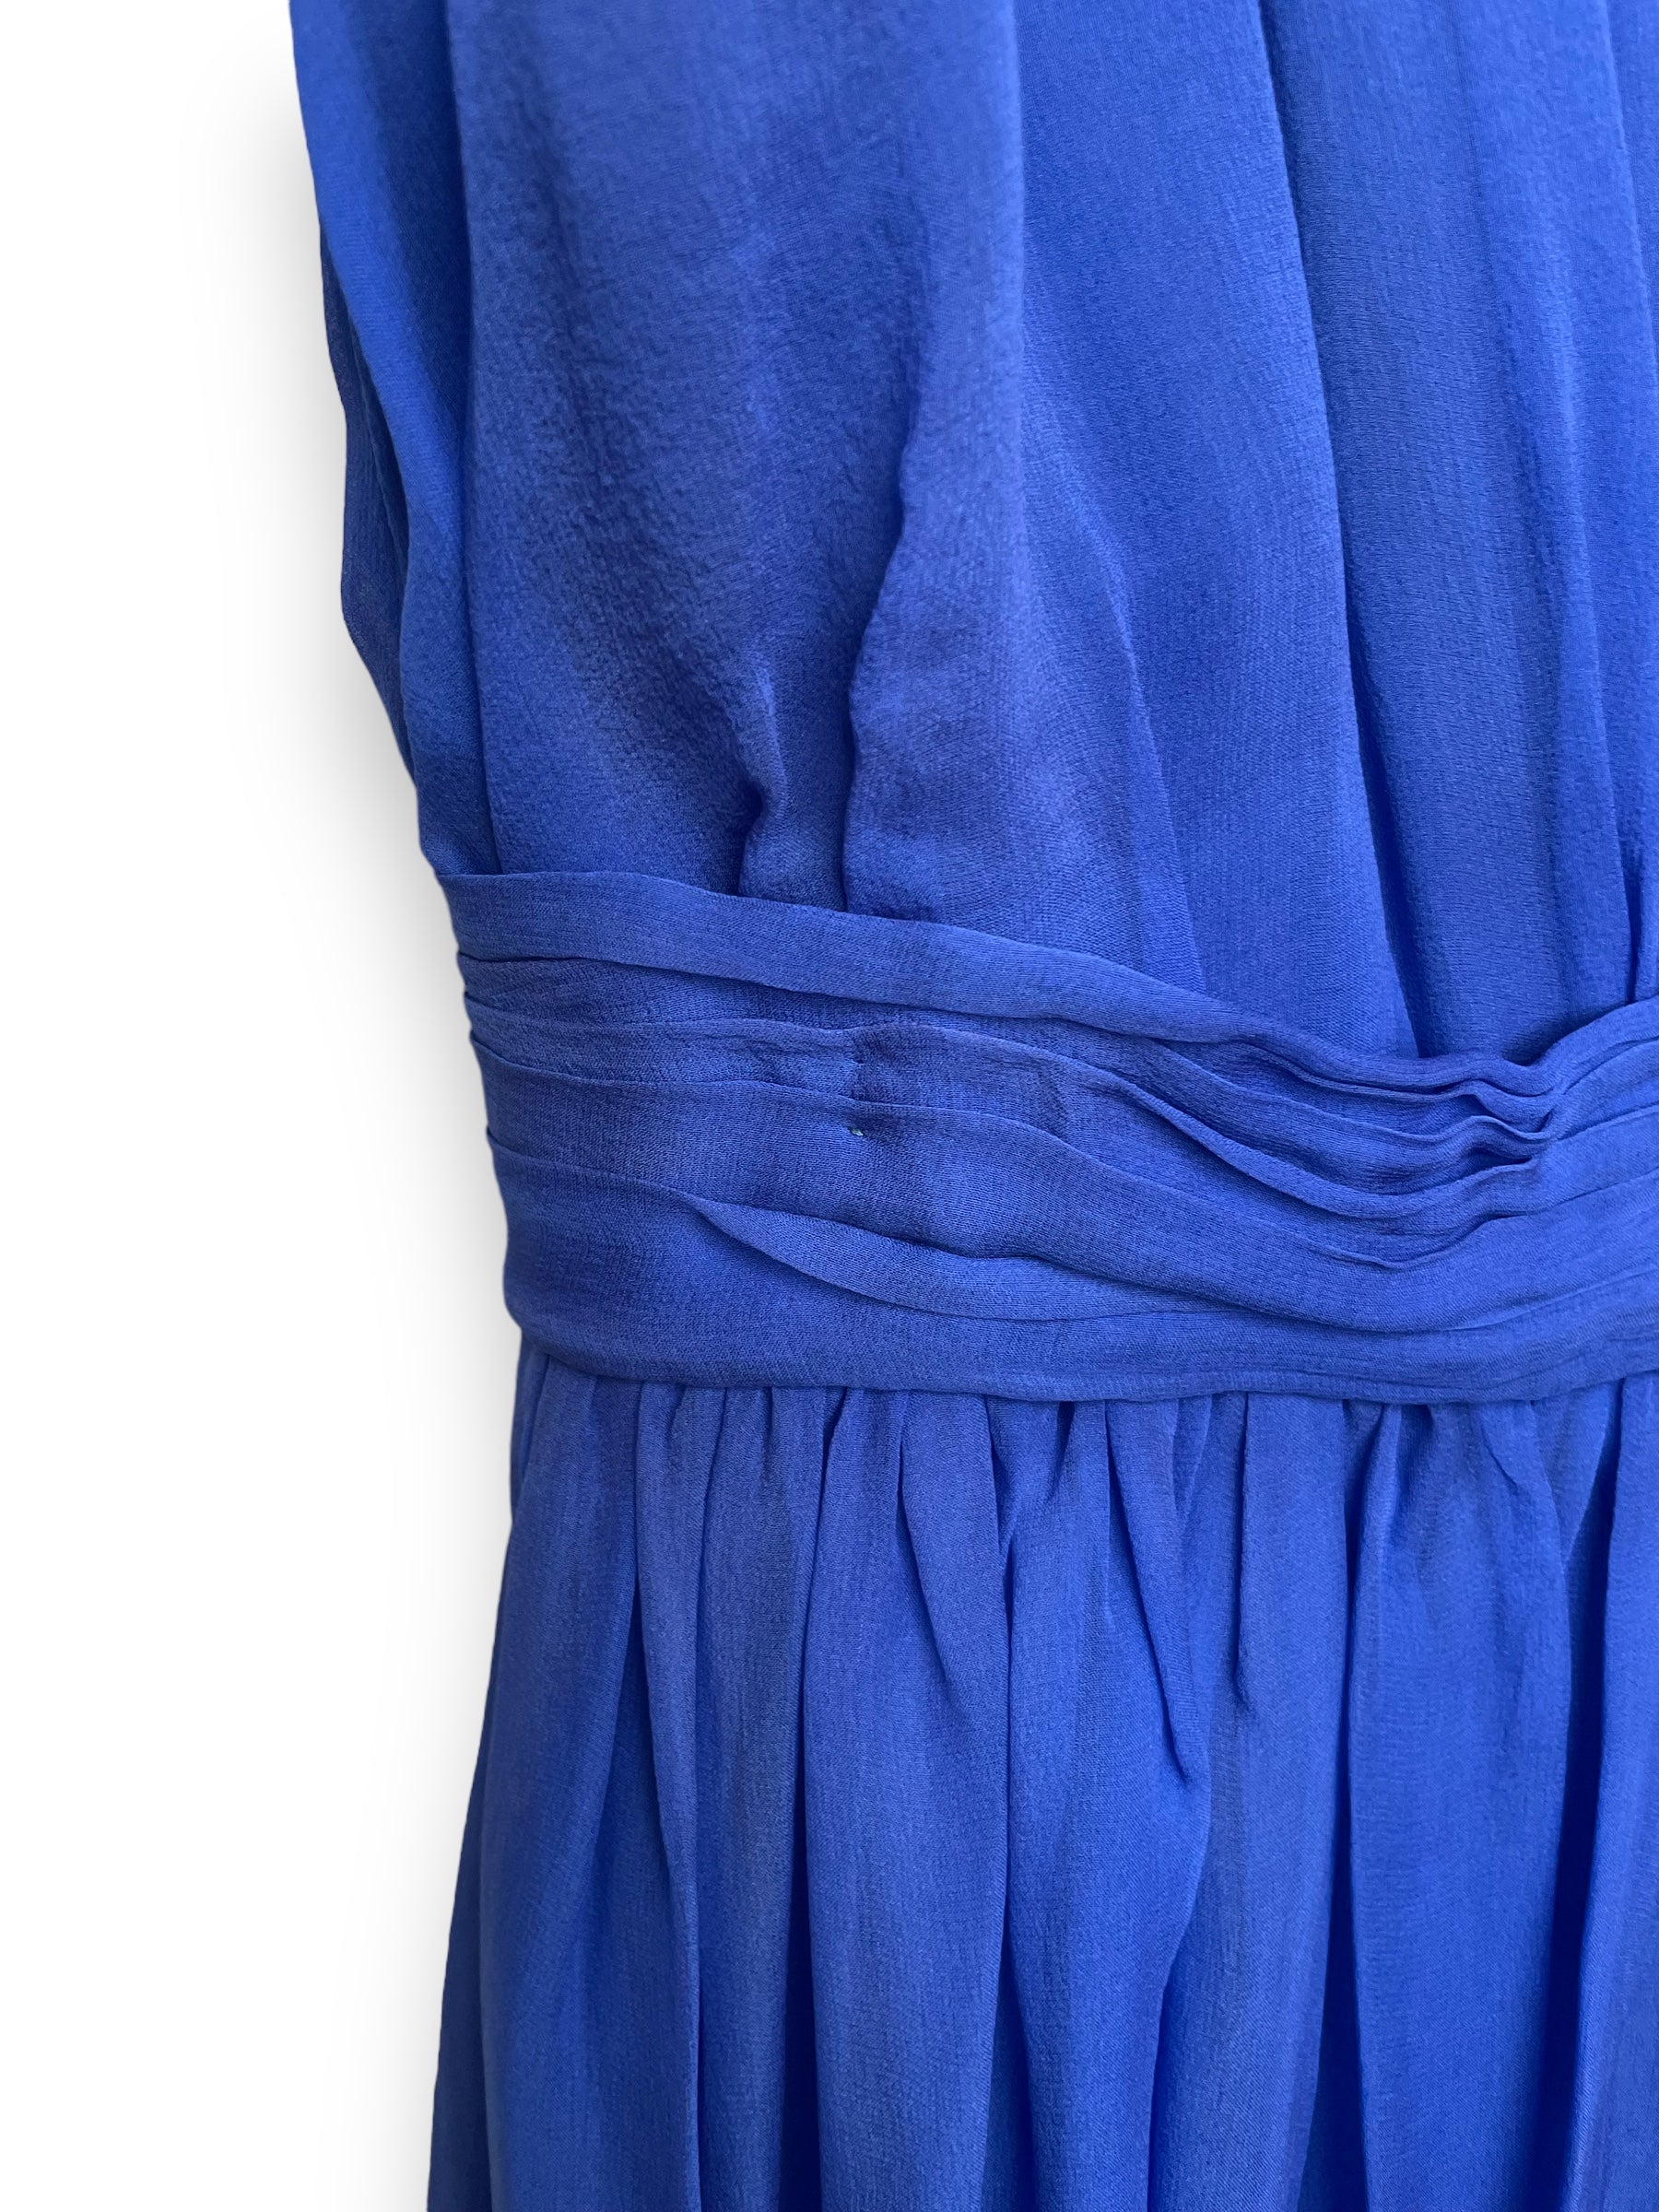 Robe cobalt de Suzy Perette